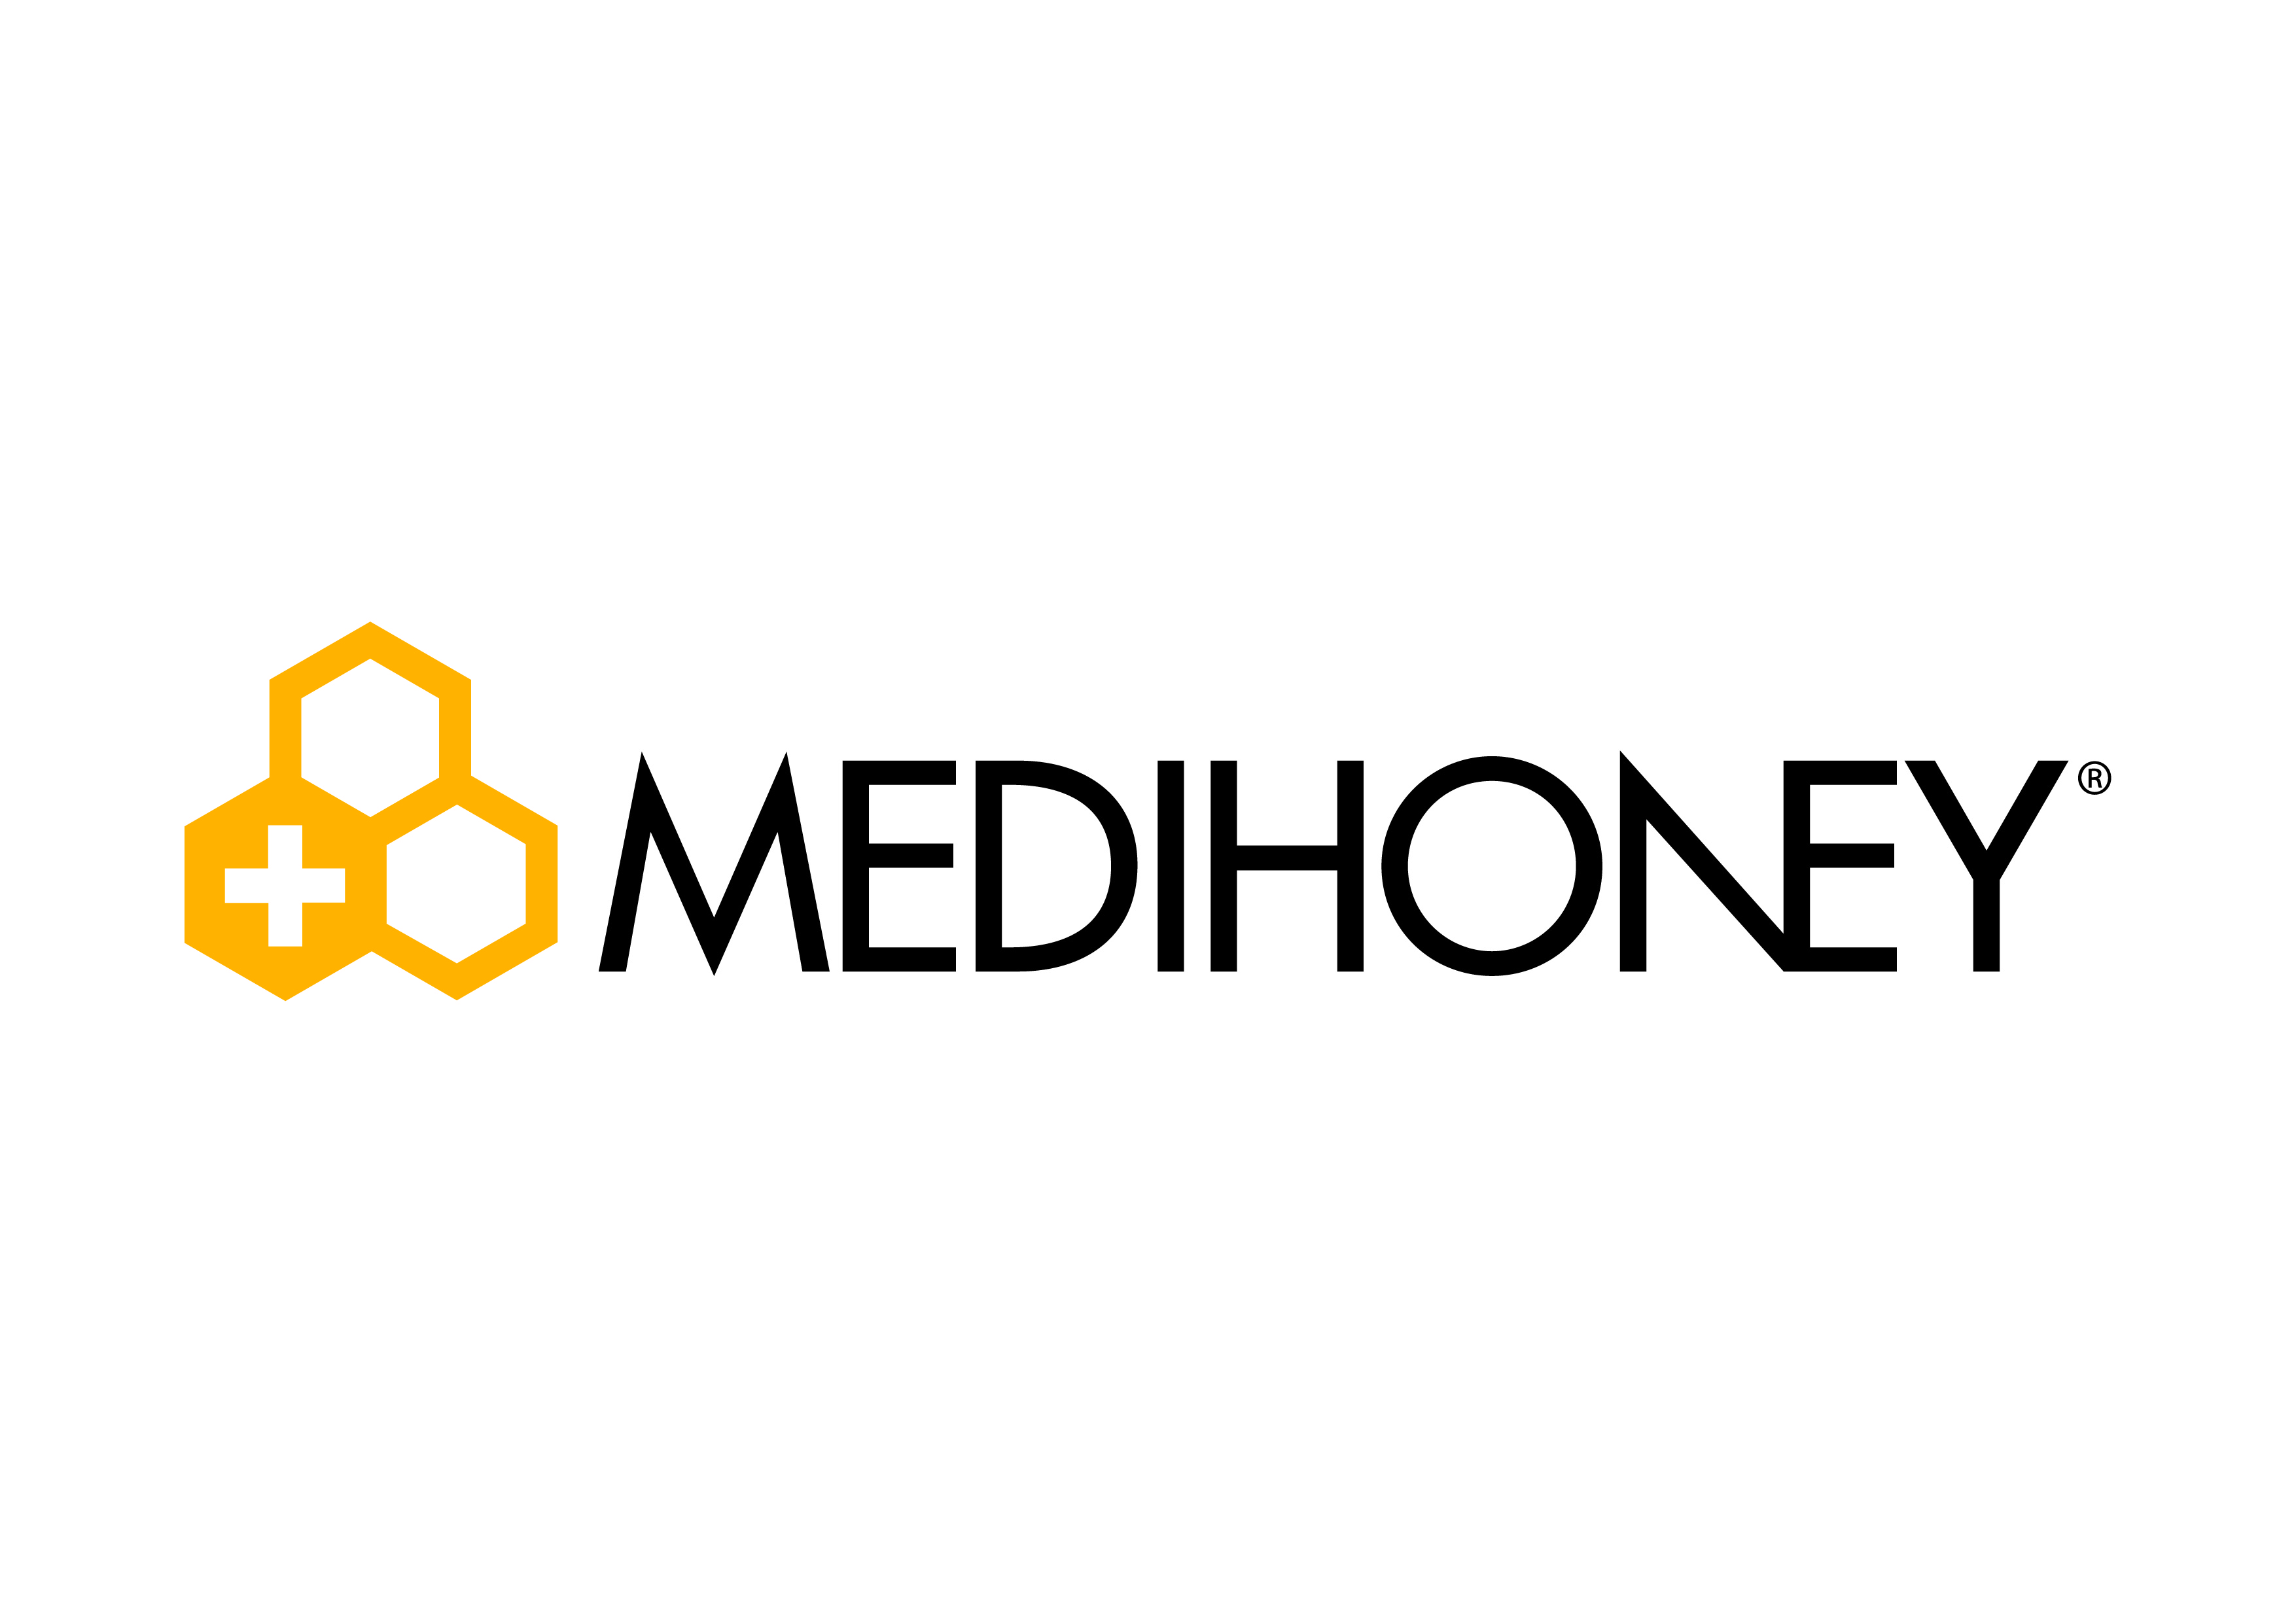 Gauze soaked in Medihoney honey